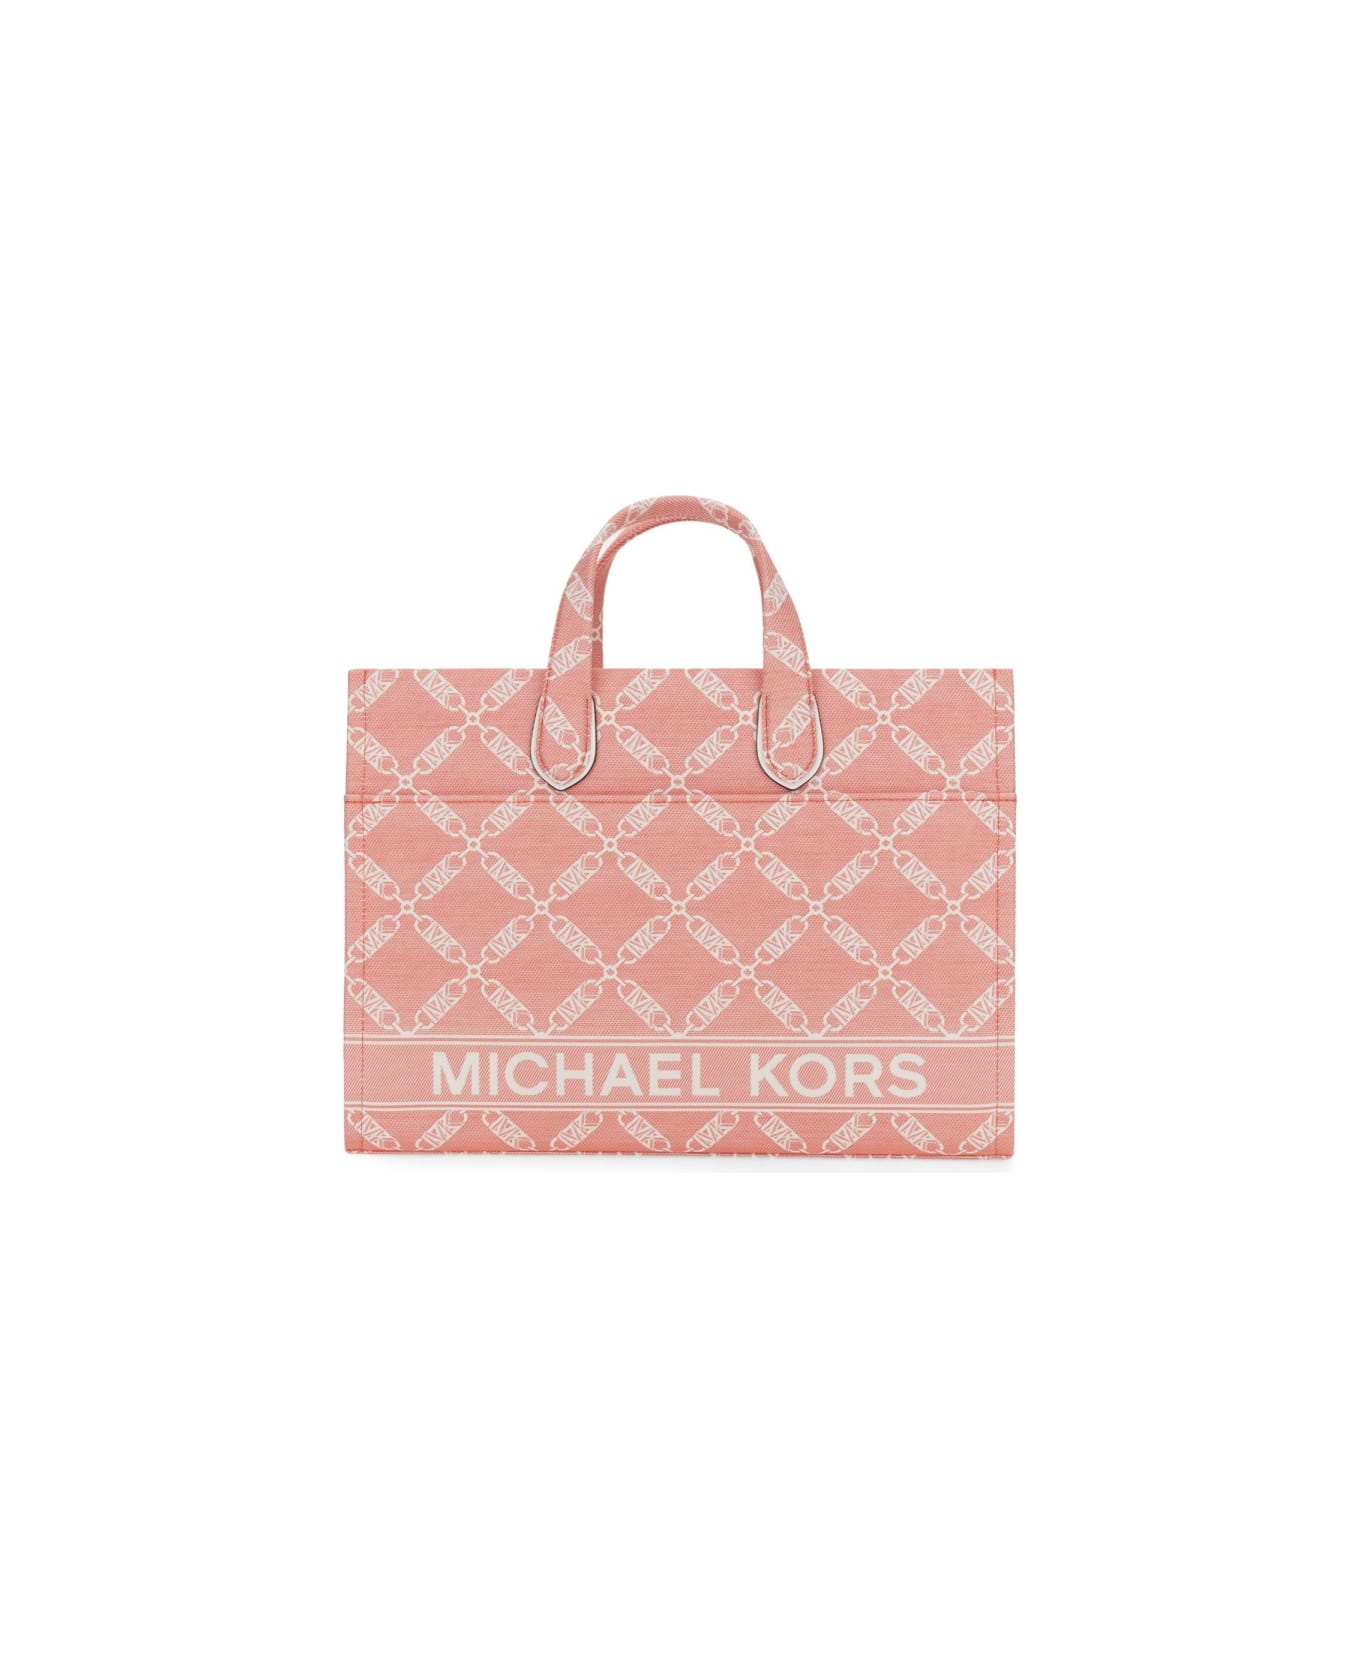 Michael Kors Gigi Large Tote Bag - SPICED CORAL